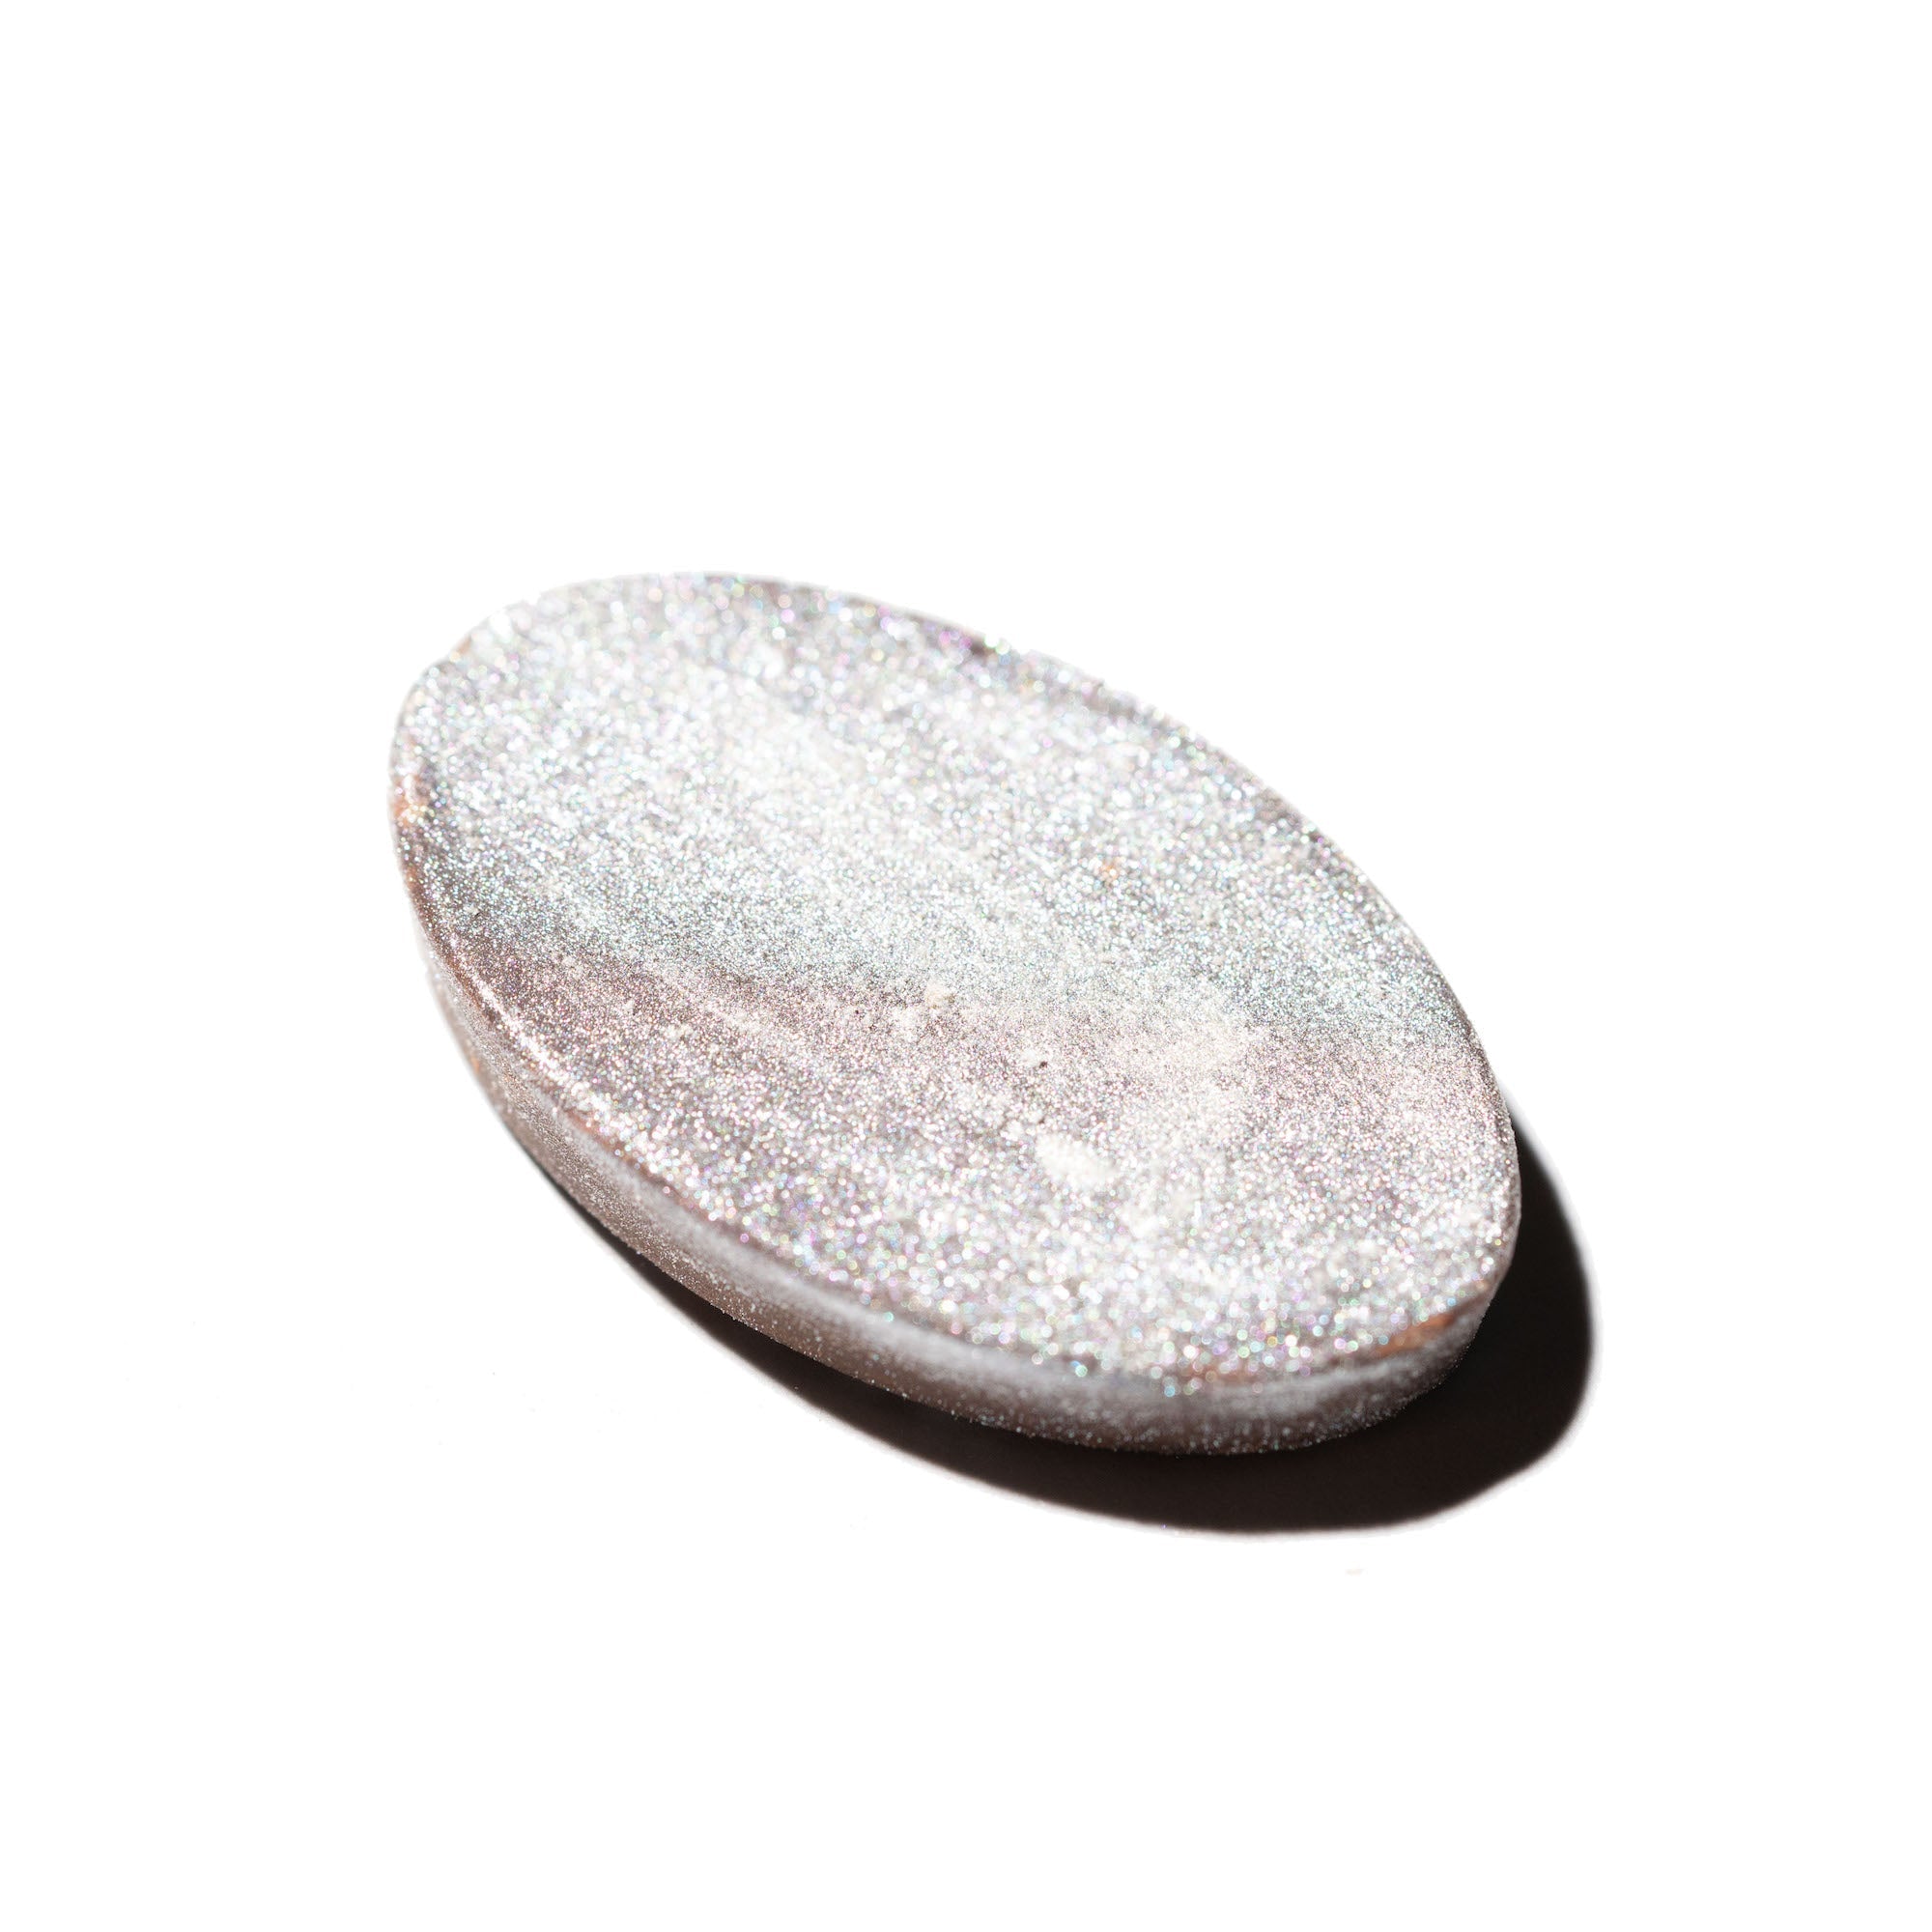 GUSTA SUPPLIES Metallic Silver Food Colouring Powder, 2g